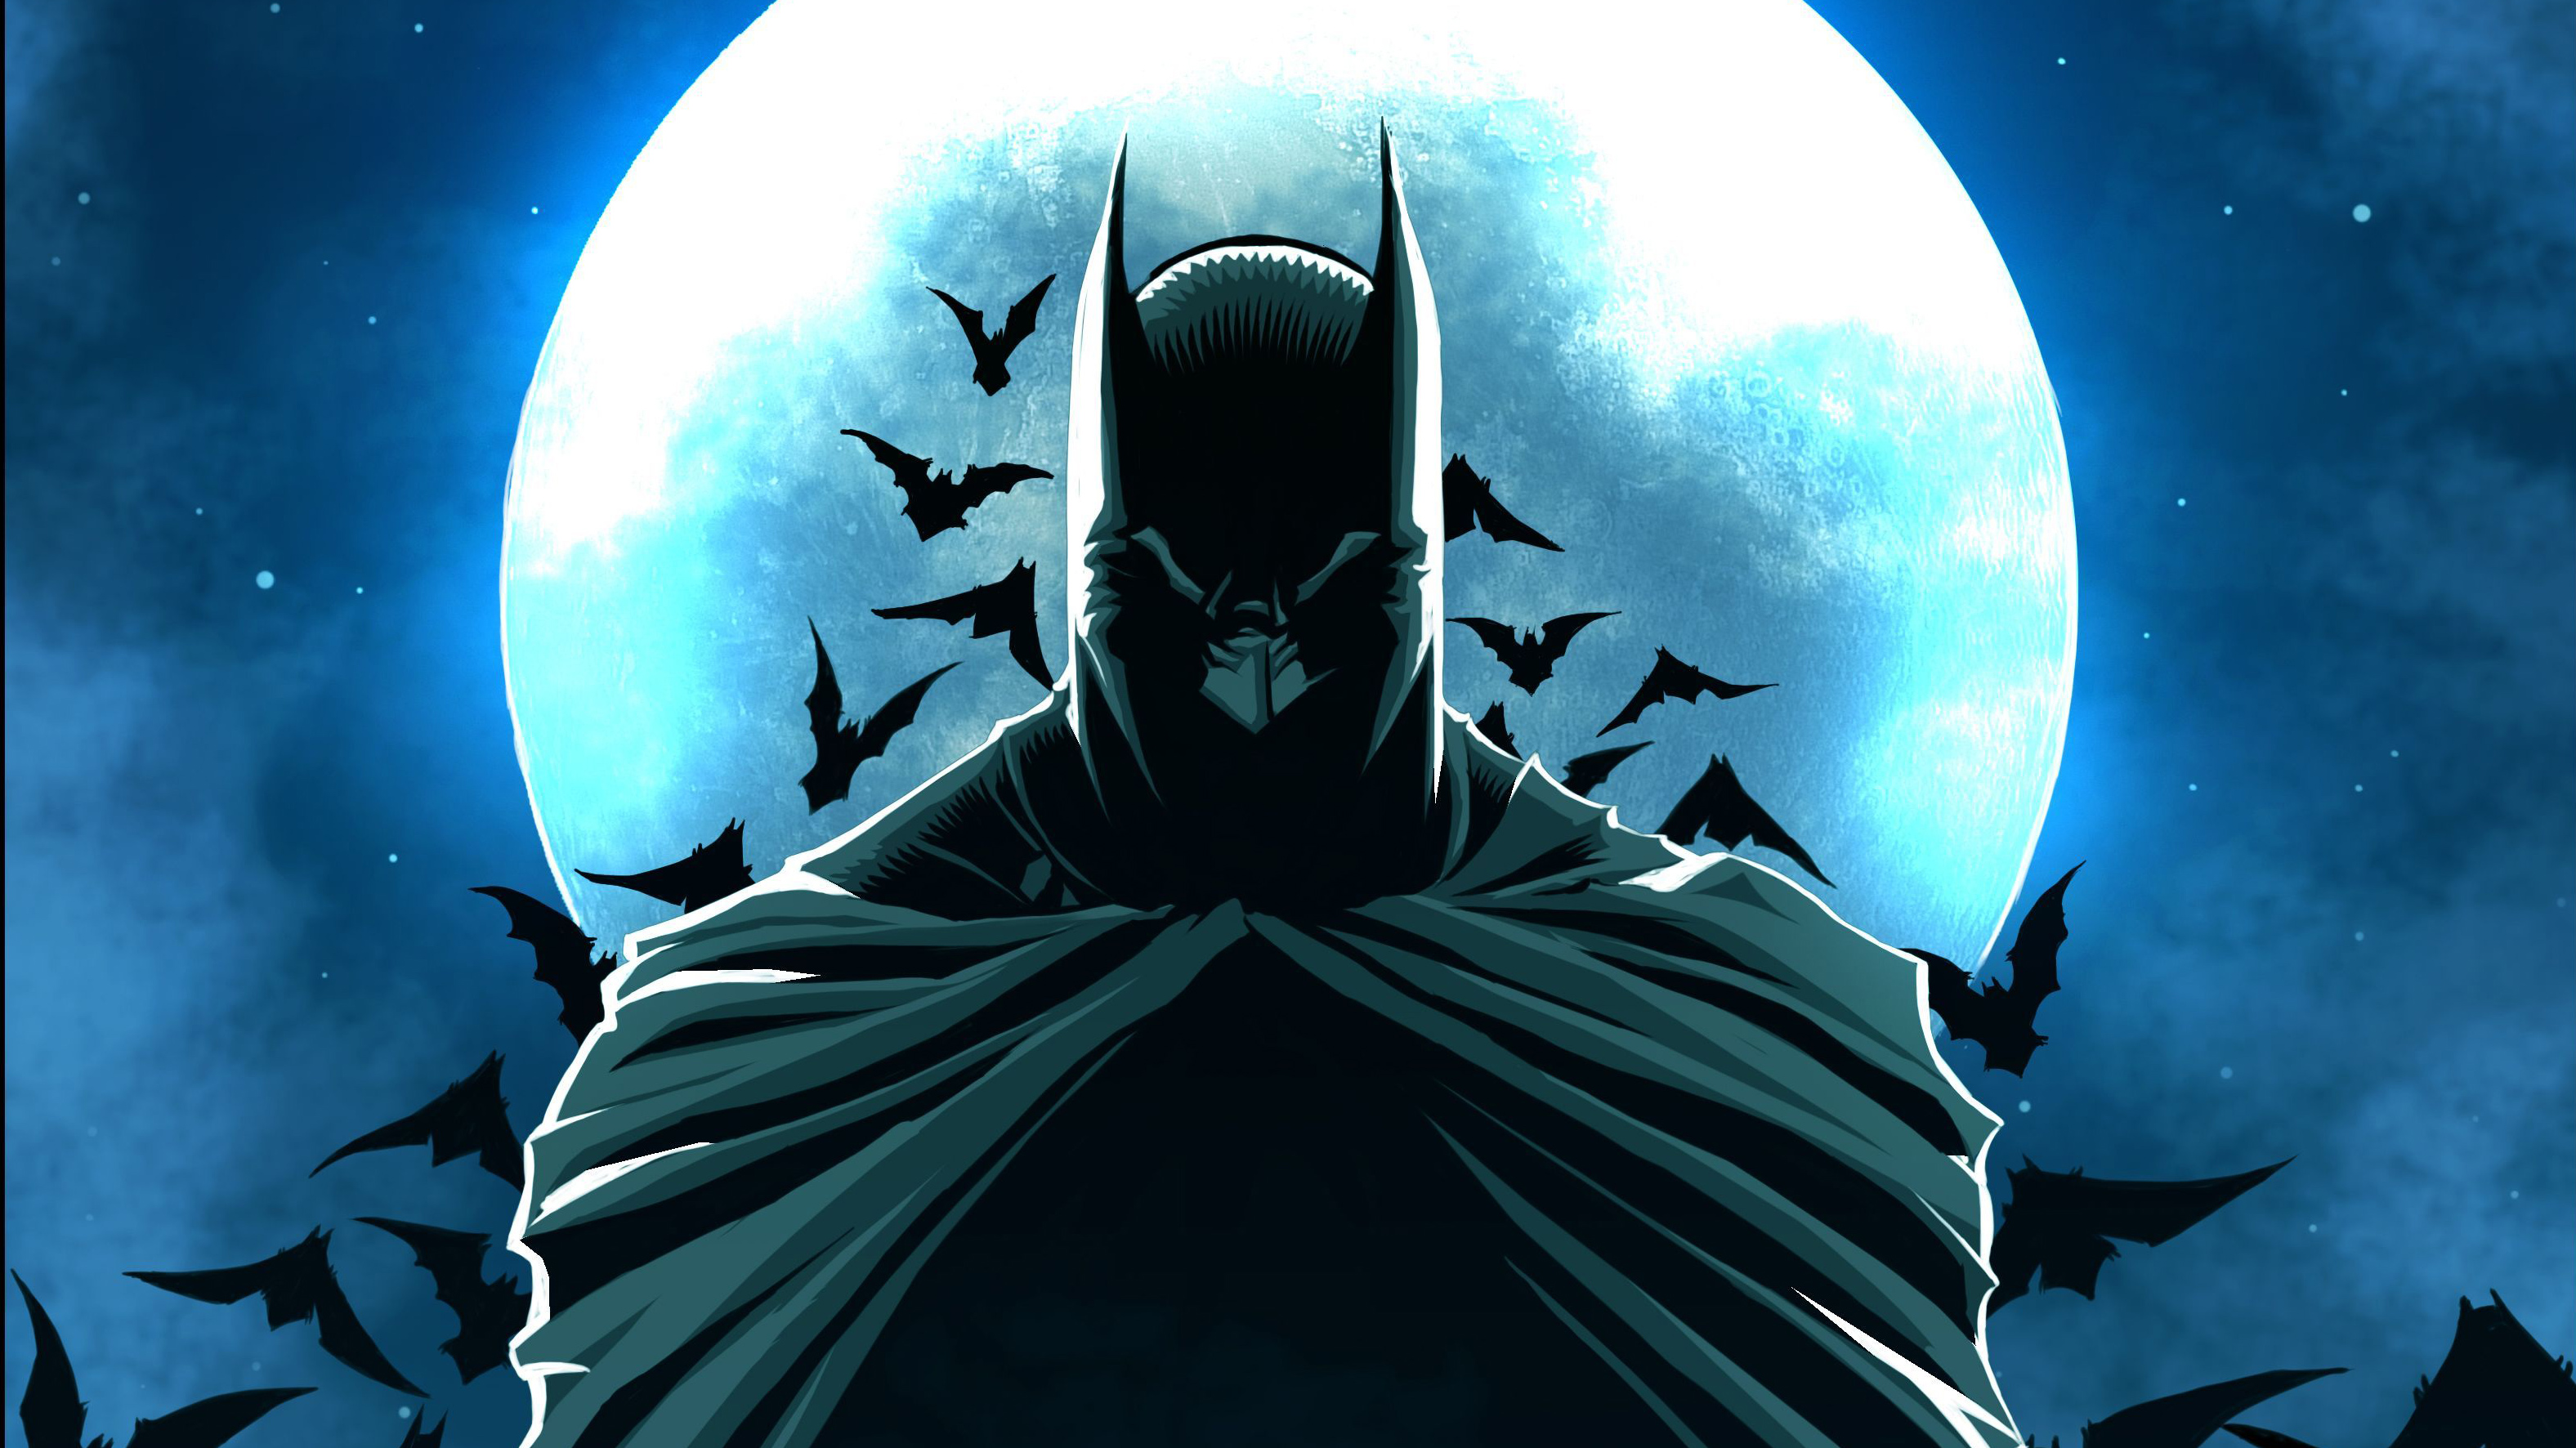 Descarga gratuita de fondo de pantalla para móvil de Luna, Murciélago, Historietas, The Batman, Dc Comics.